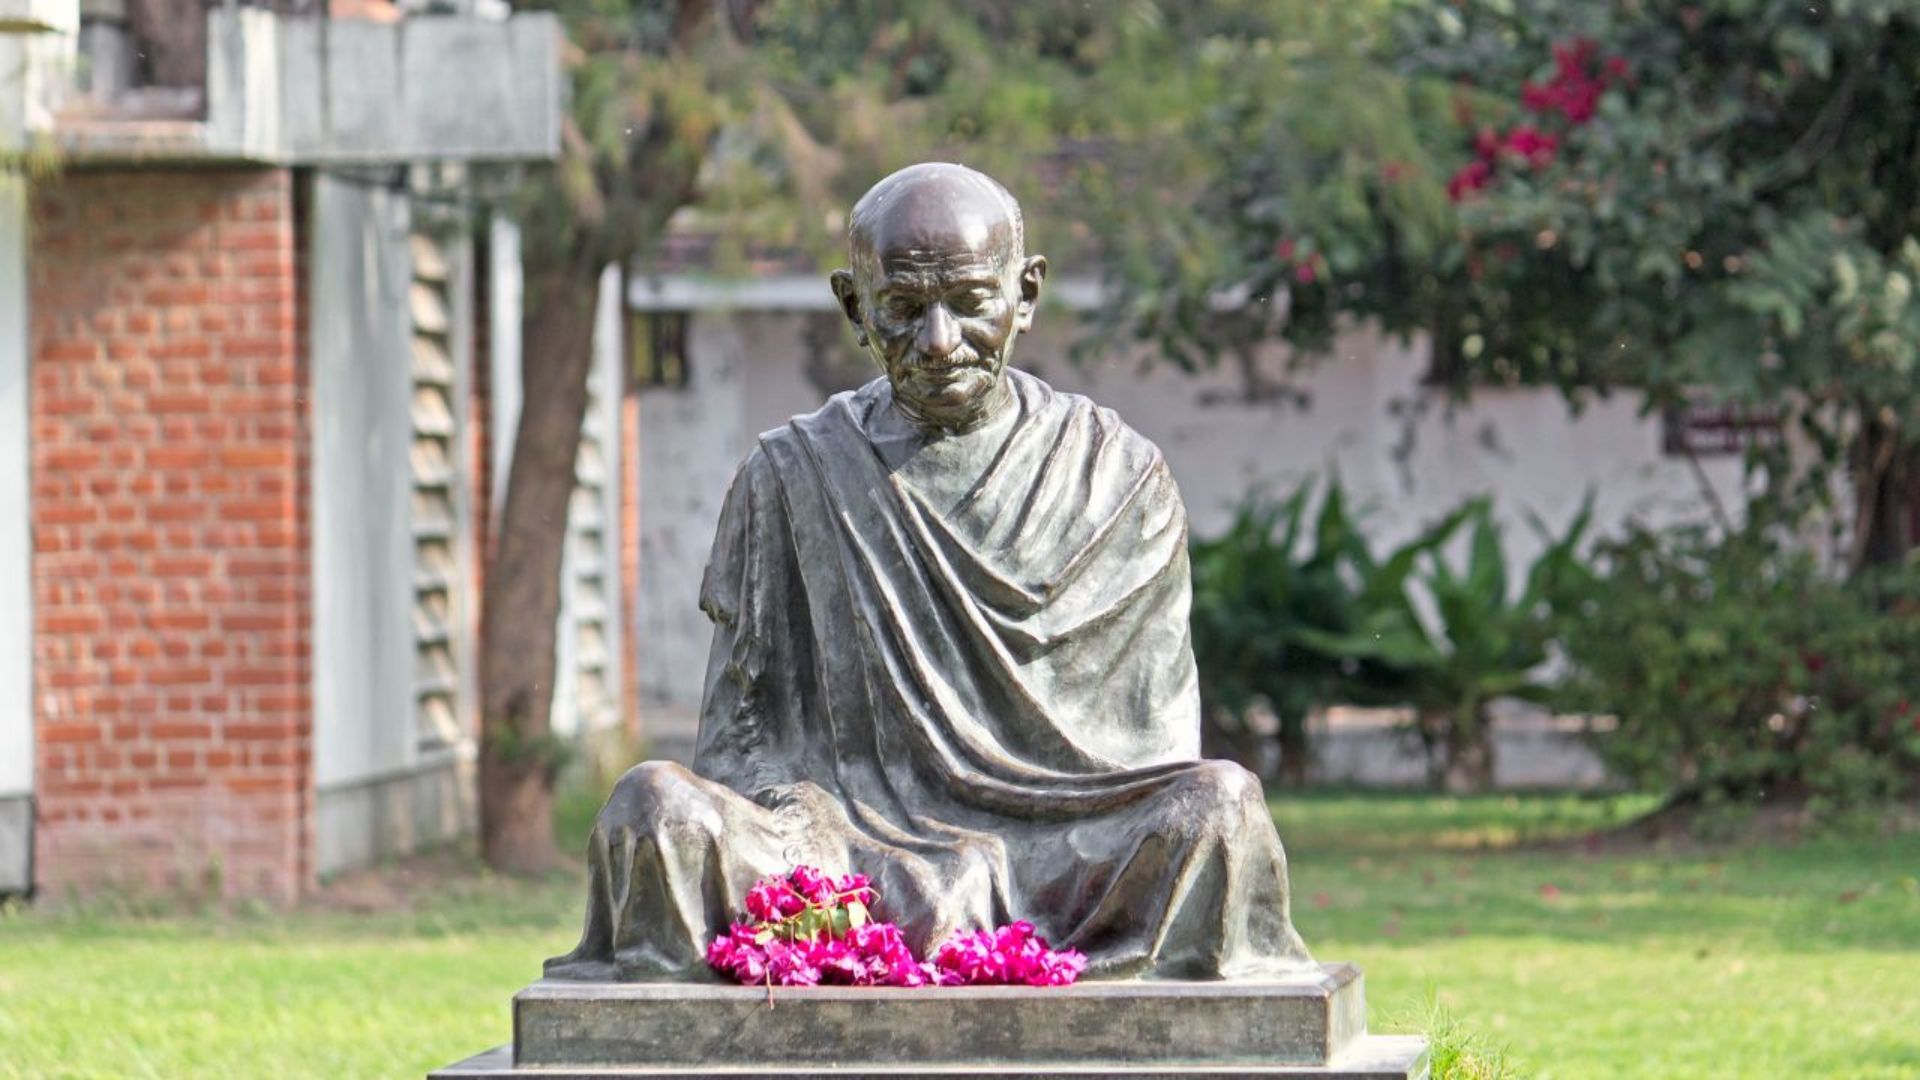 The Statue of Mahatma Gandhi